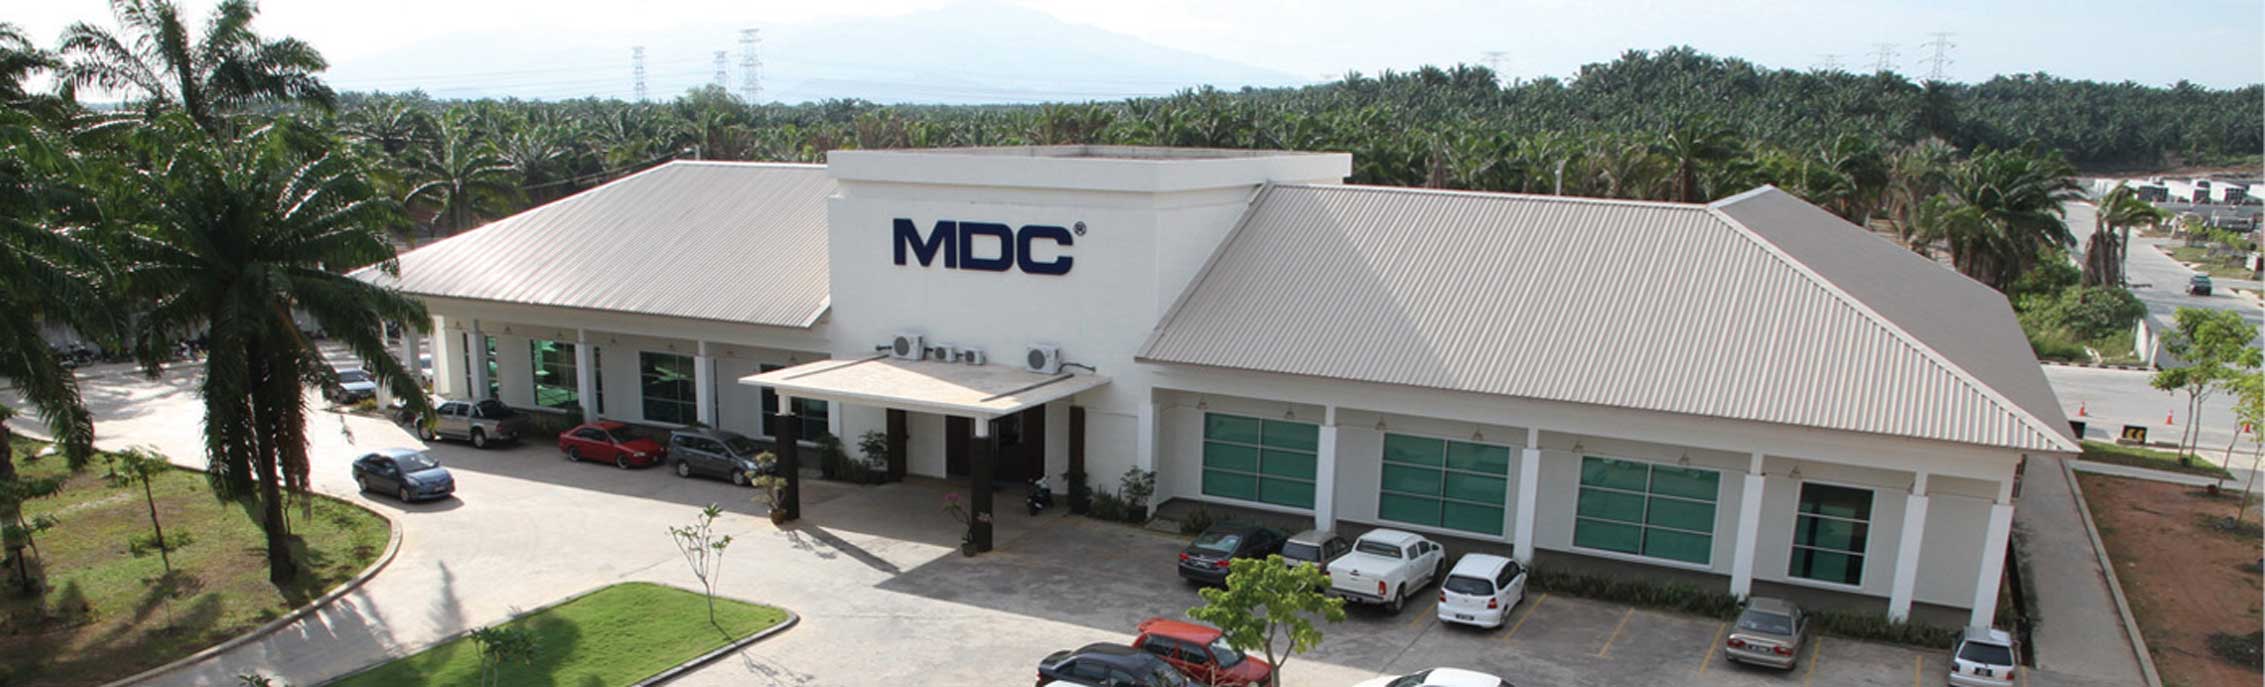 Macro Dimension Concrete Group (MDC)